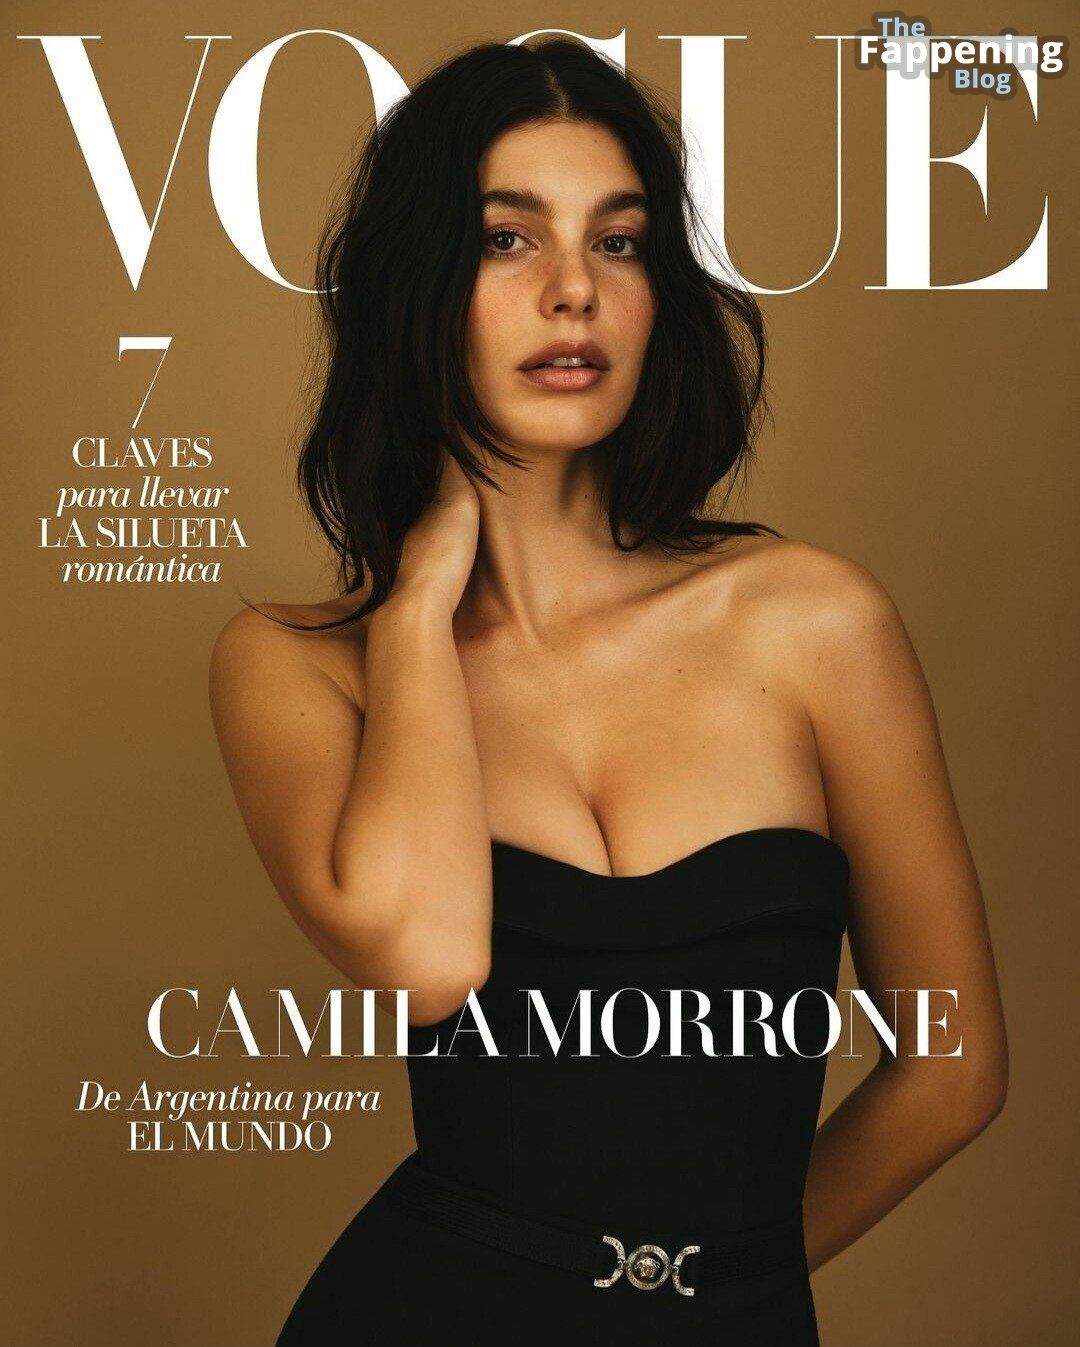 Camila-Morrone-Sexy-17-The-Fappening-Blog.jpg